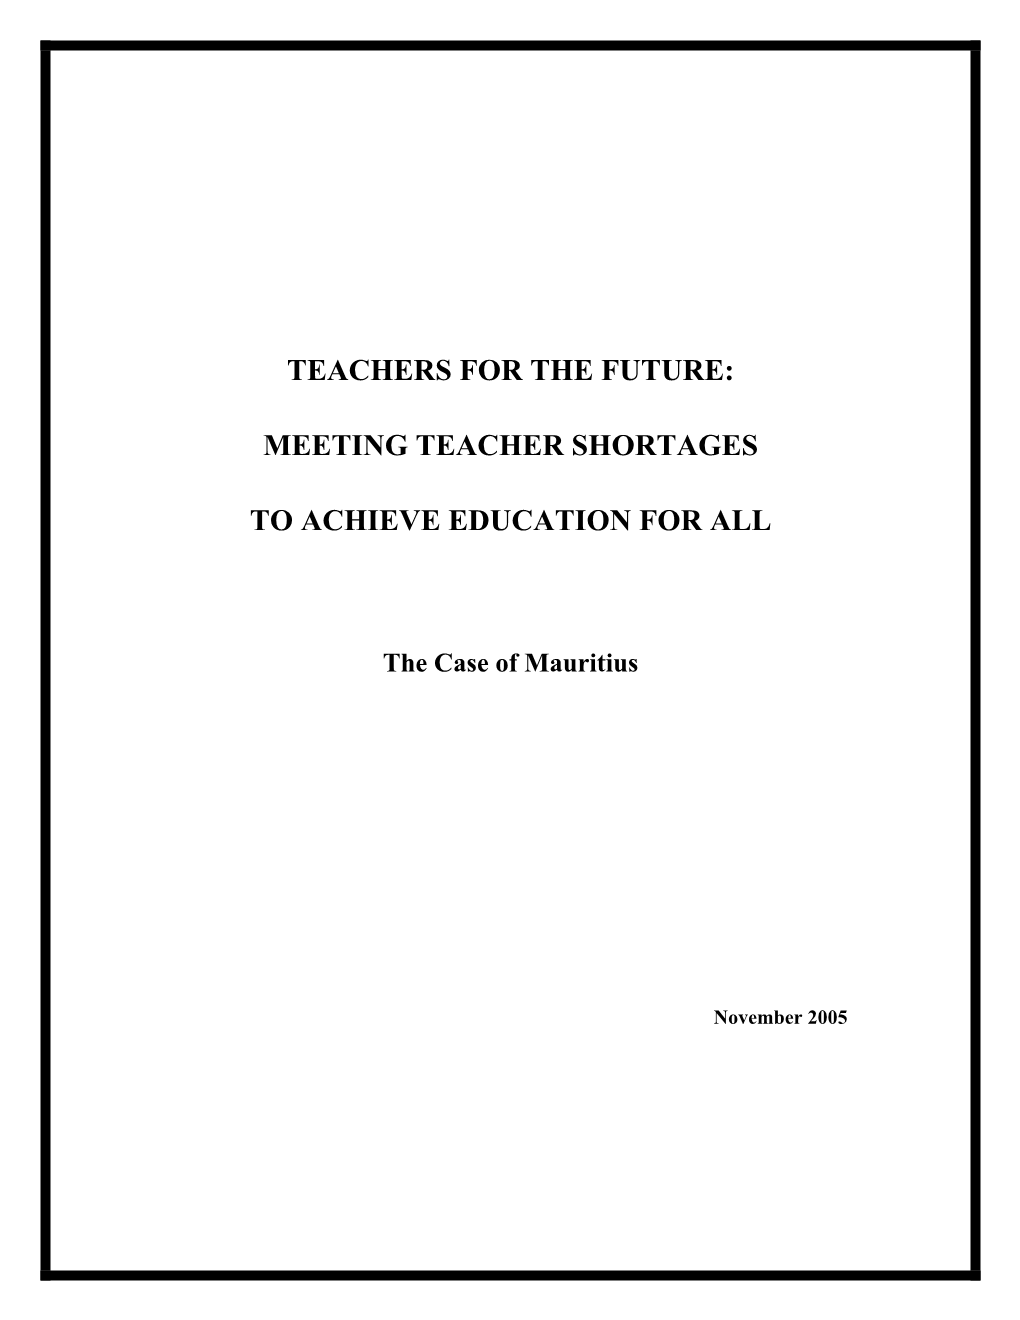 Teachers for the Future